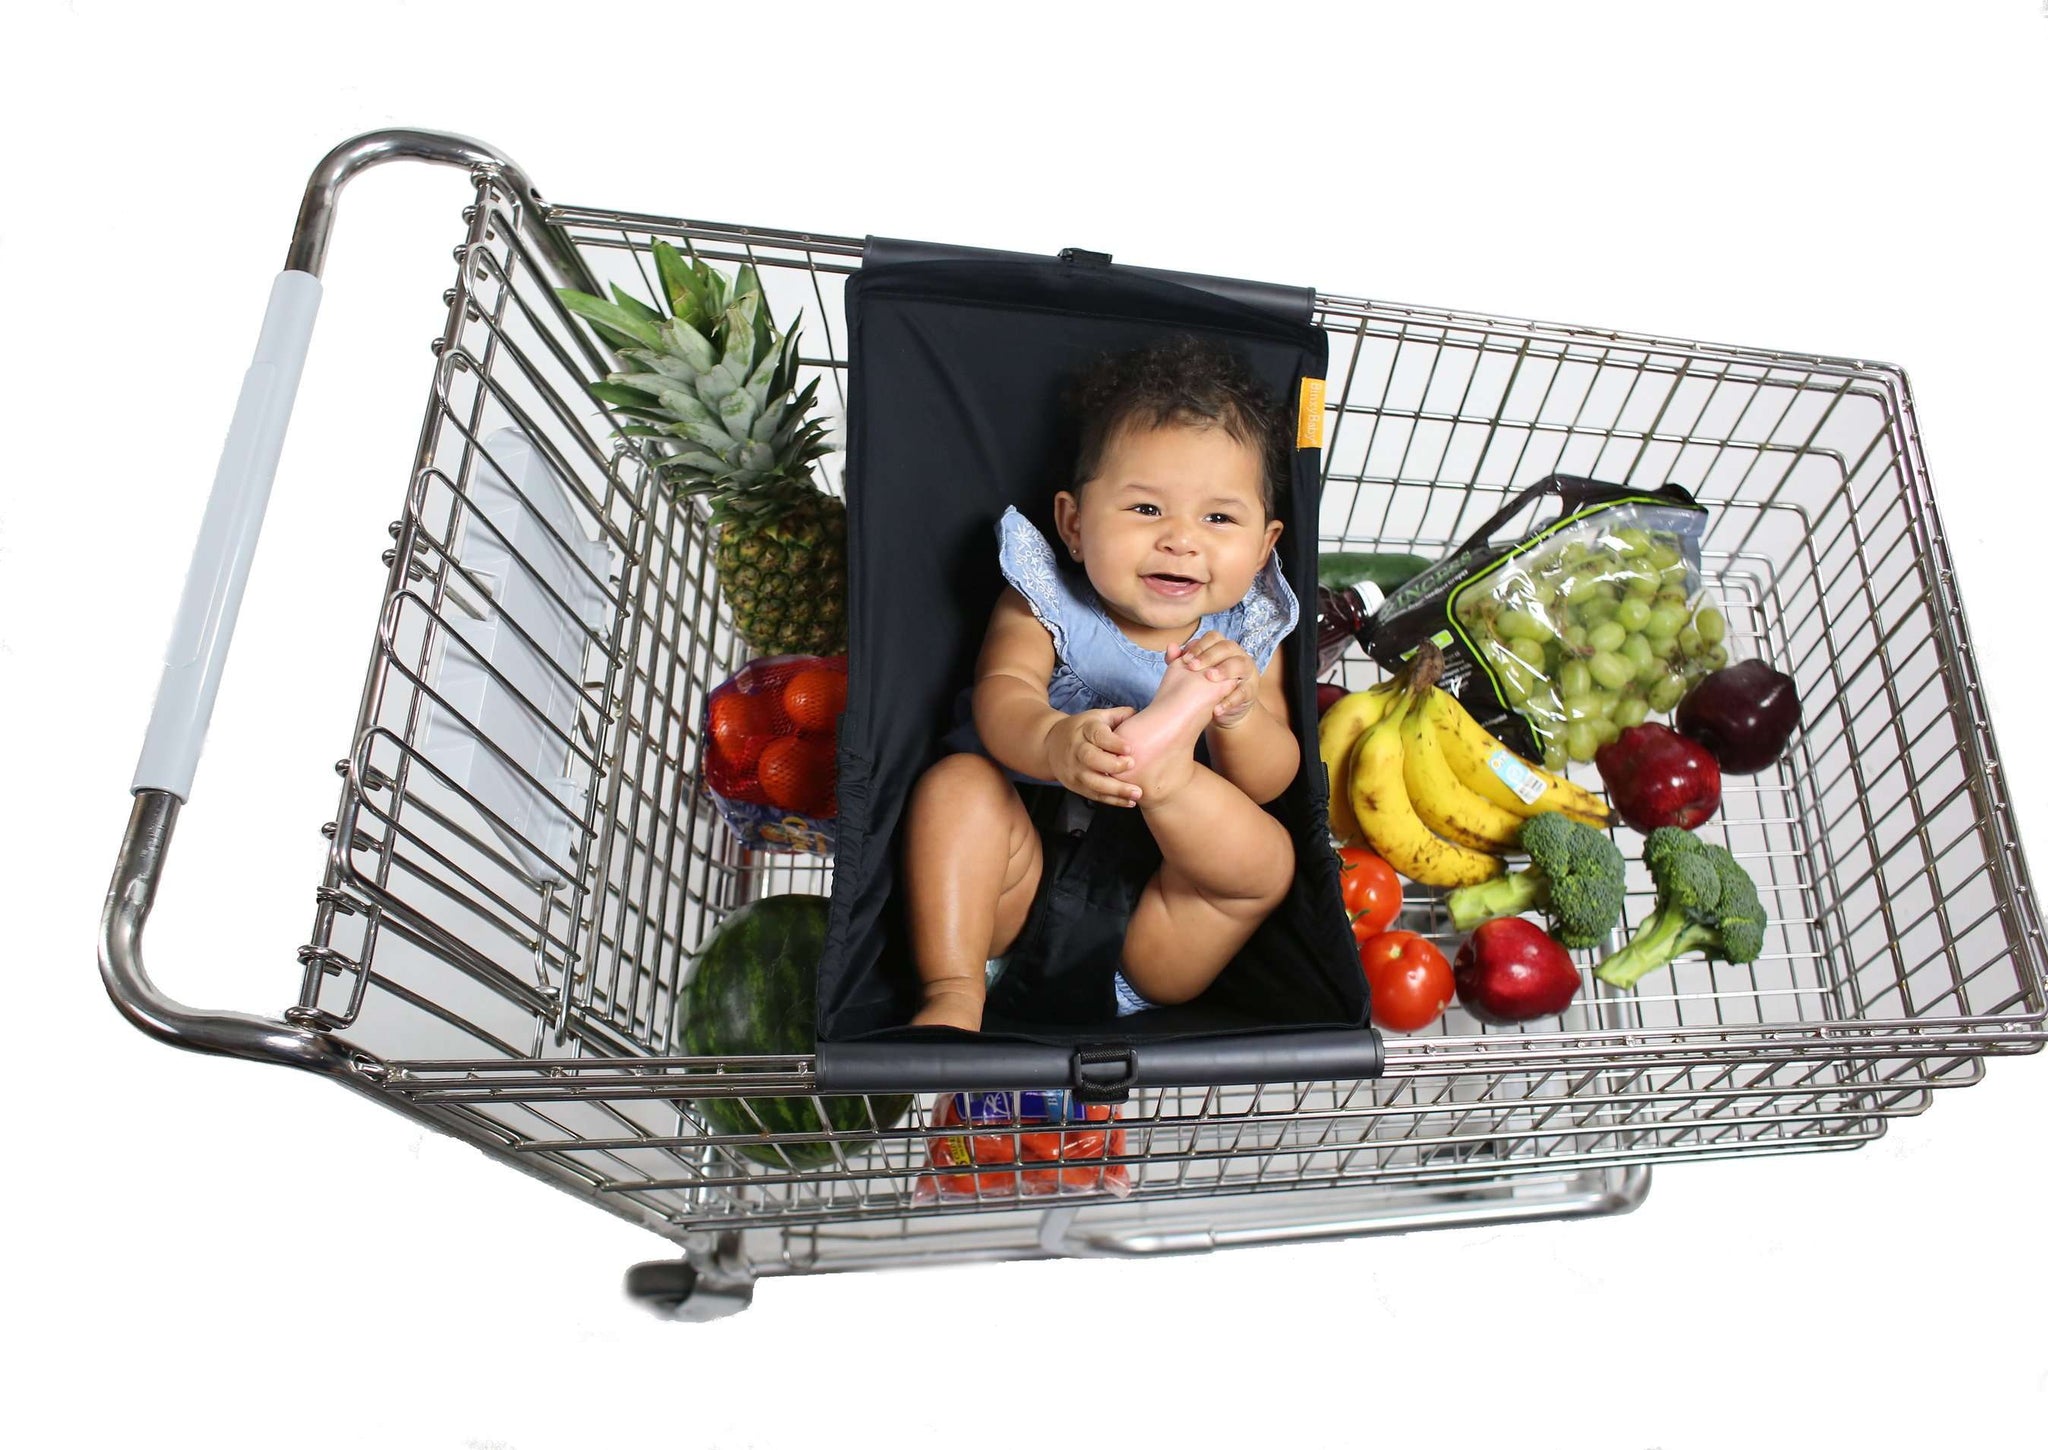 Binxy Baby Shopping Cart Hammock — Home With Joanie